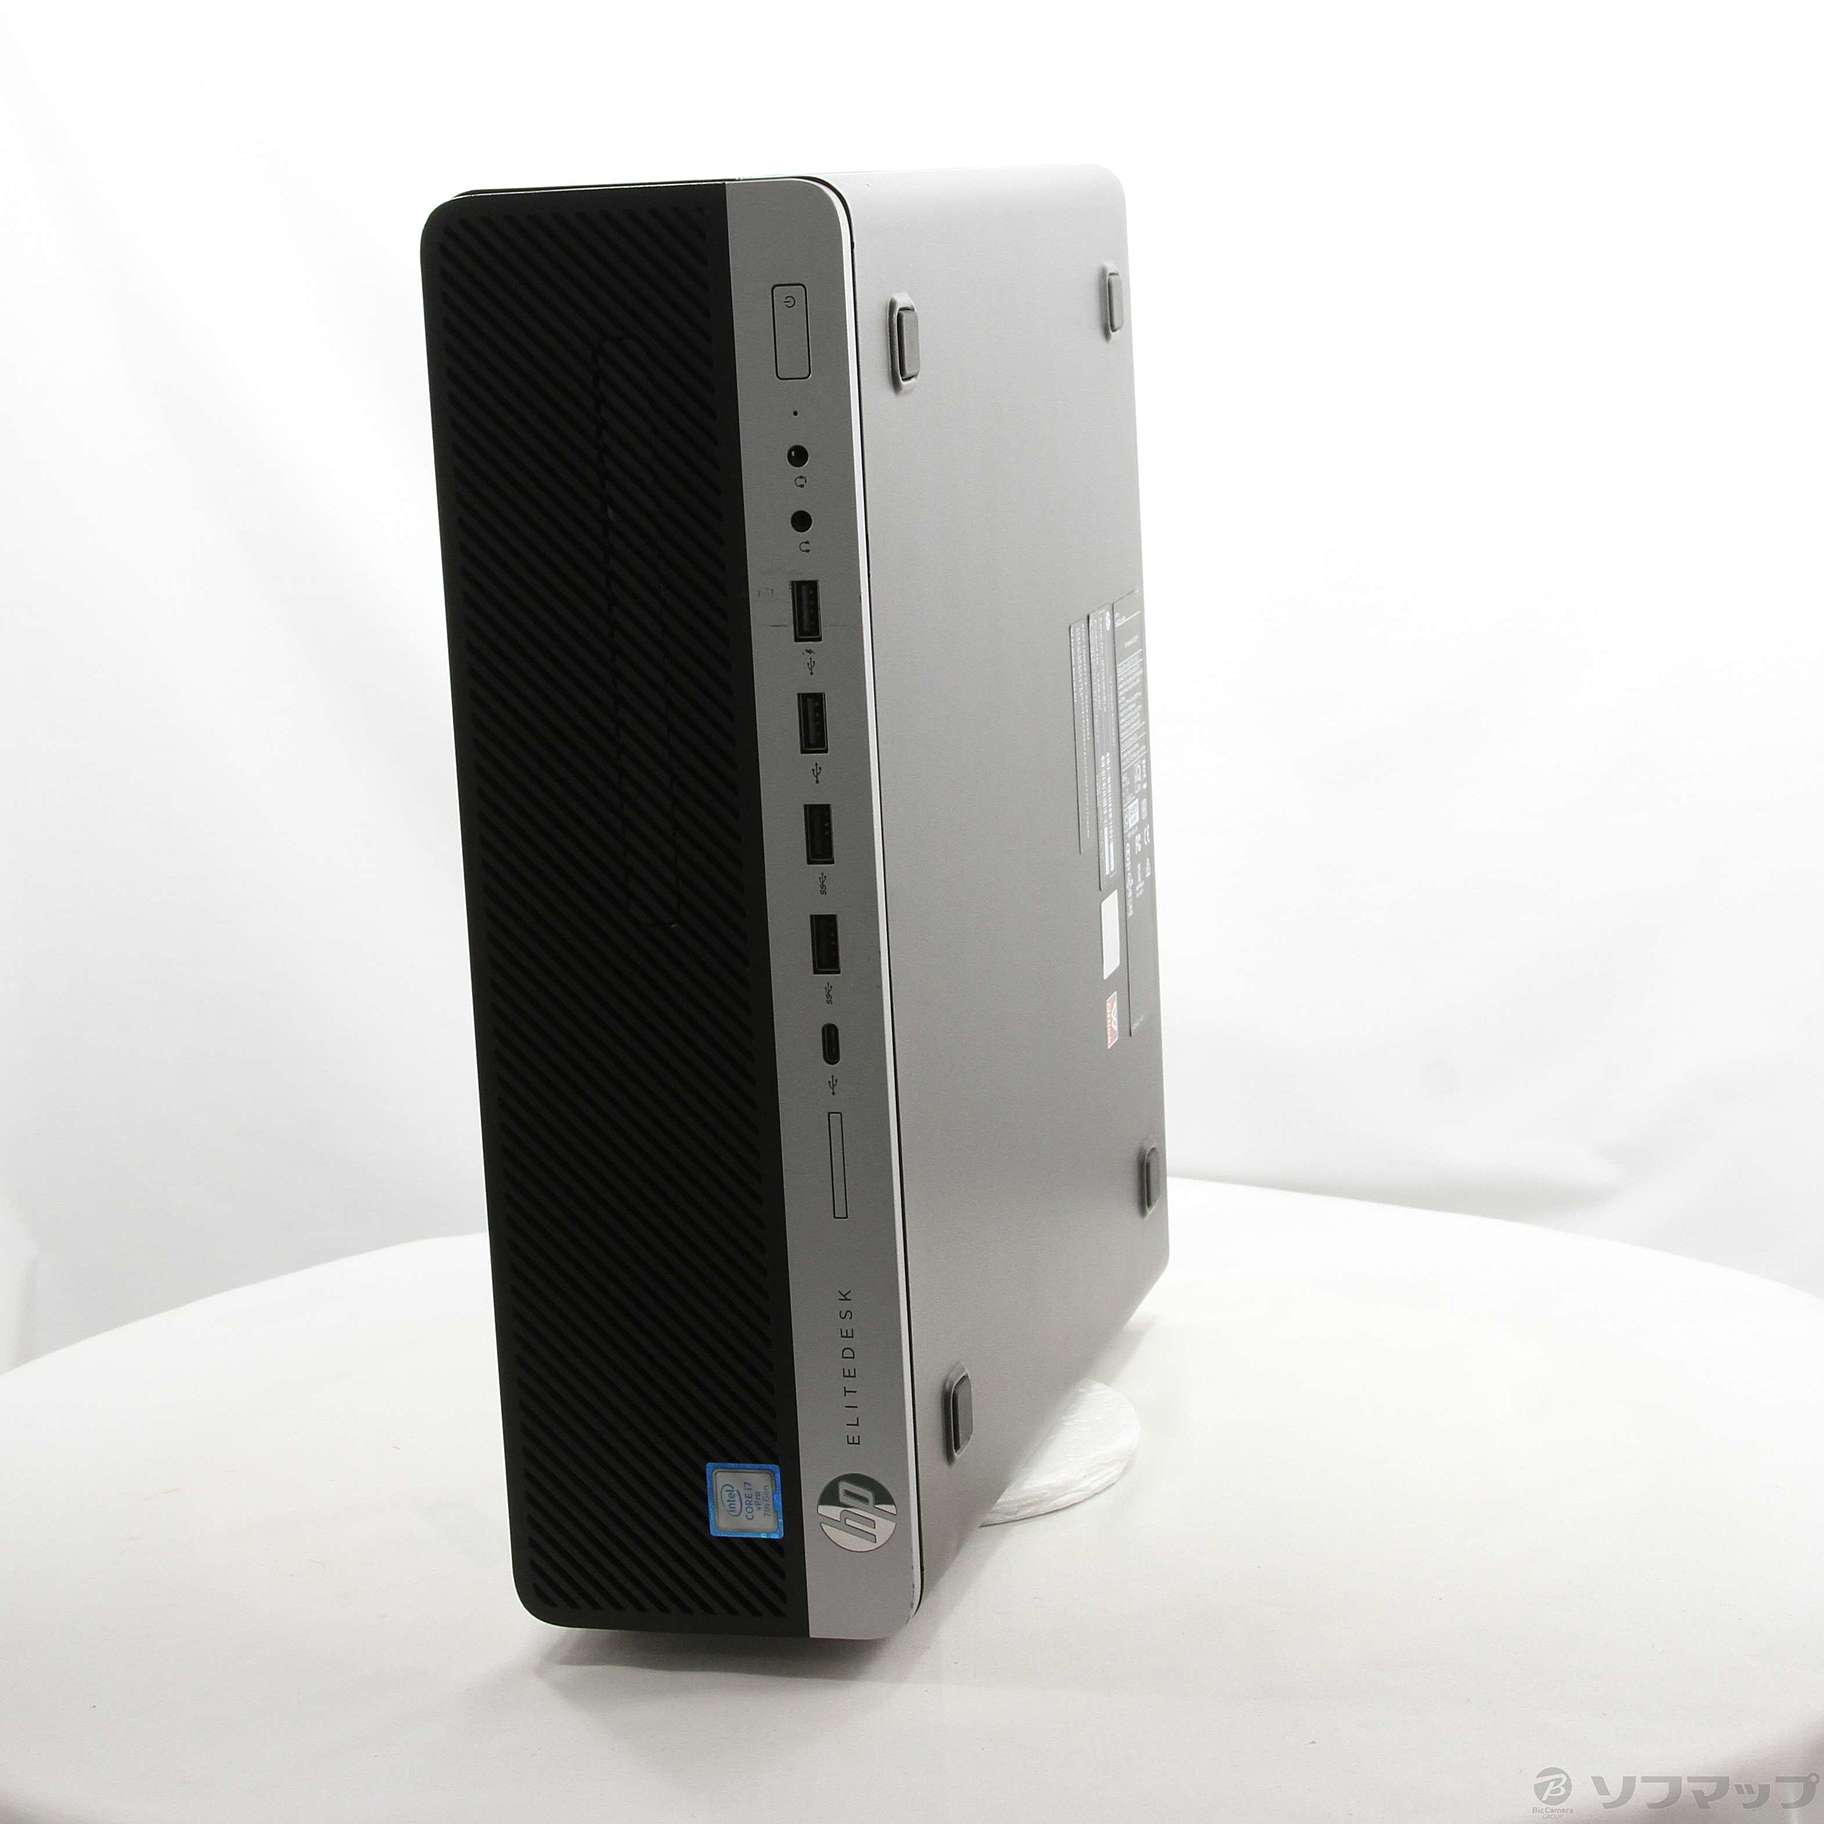 SSDHP EliteDesk 800 G3 Core-i7 7700 SSD256 - Windowsデスクトップ